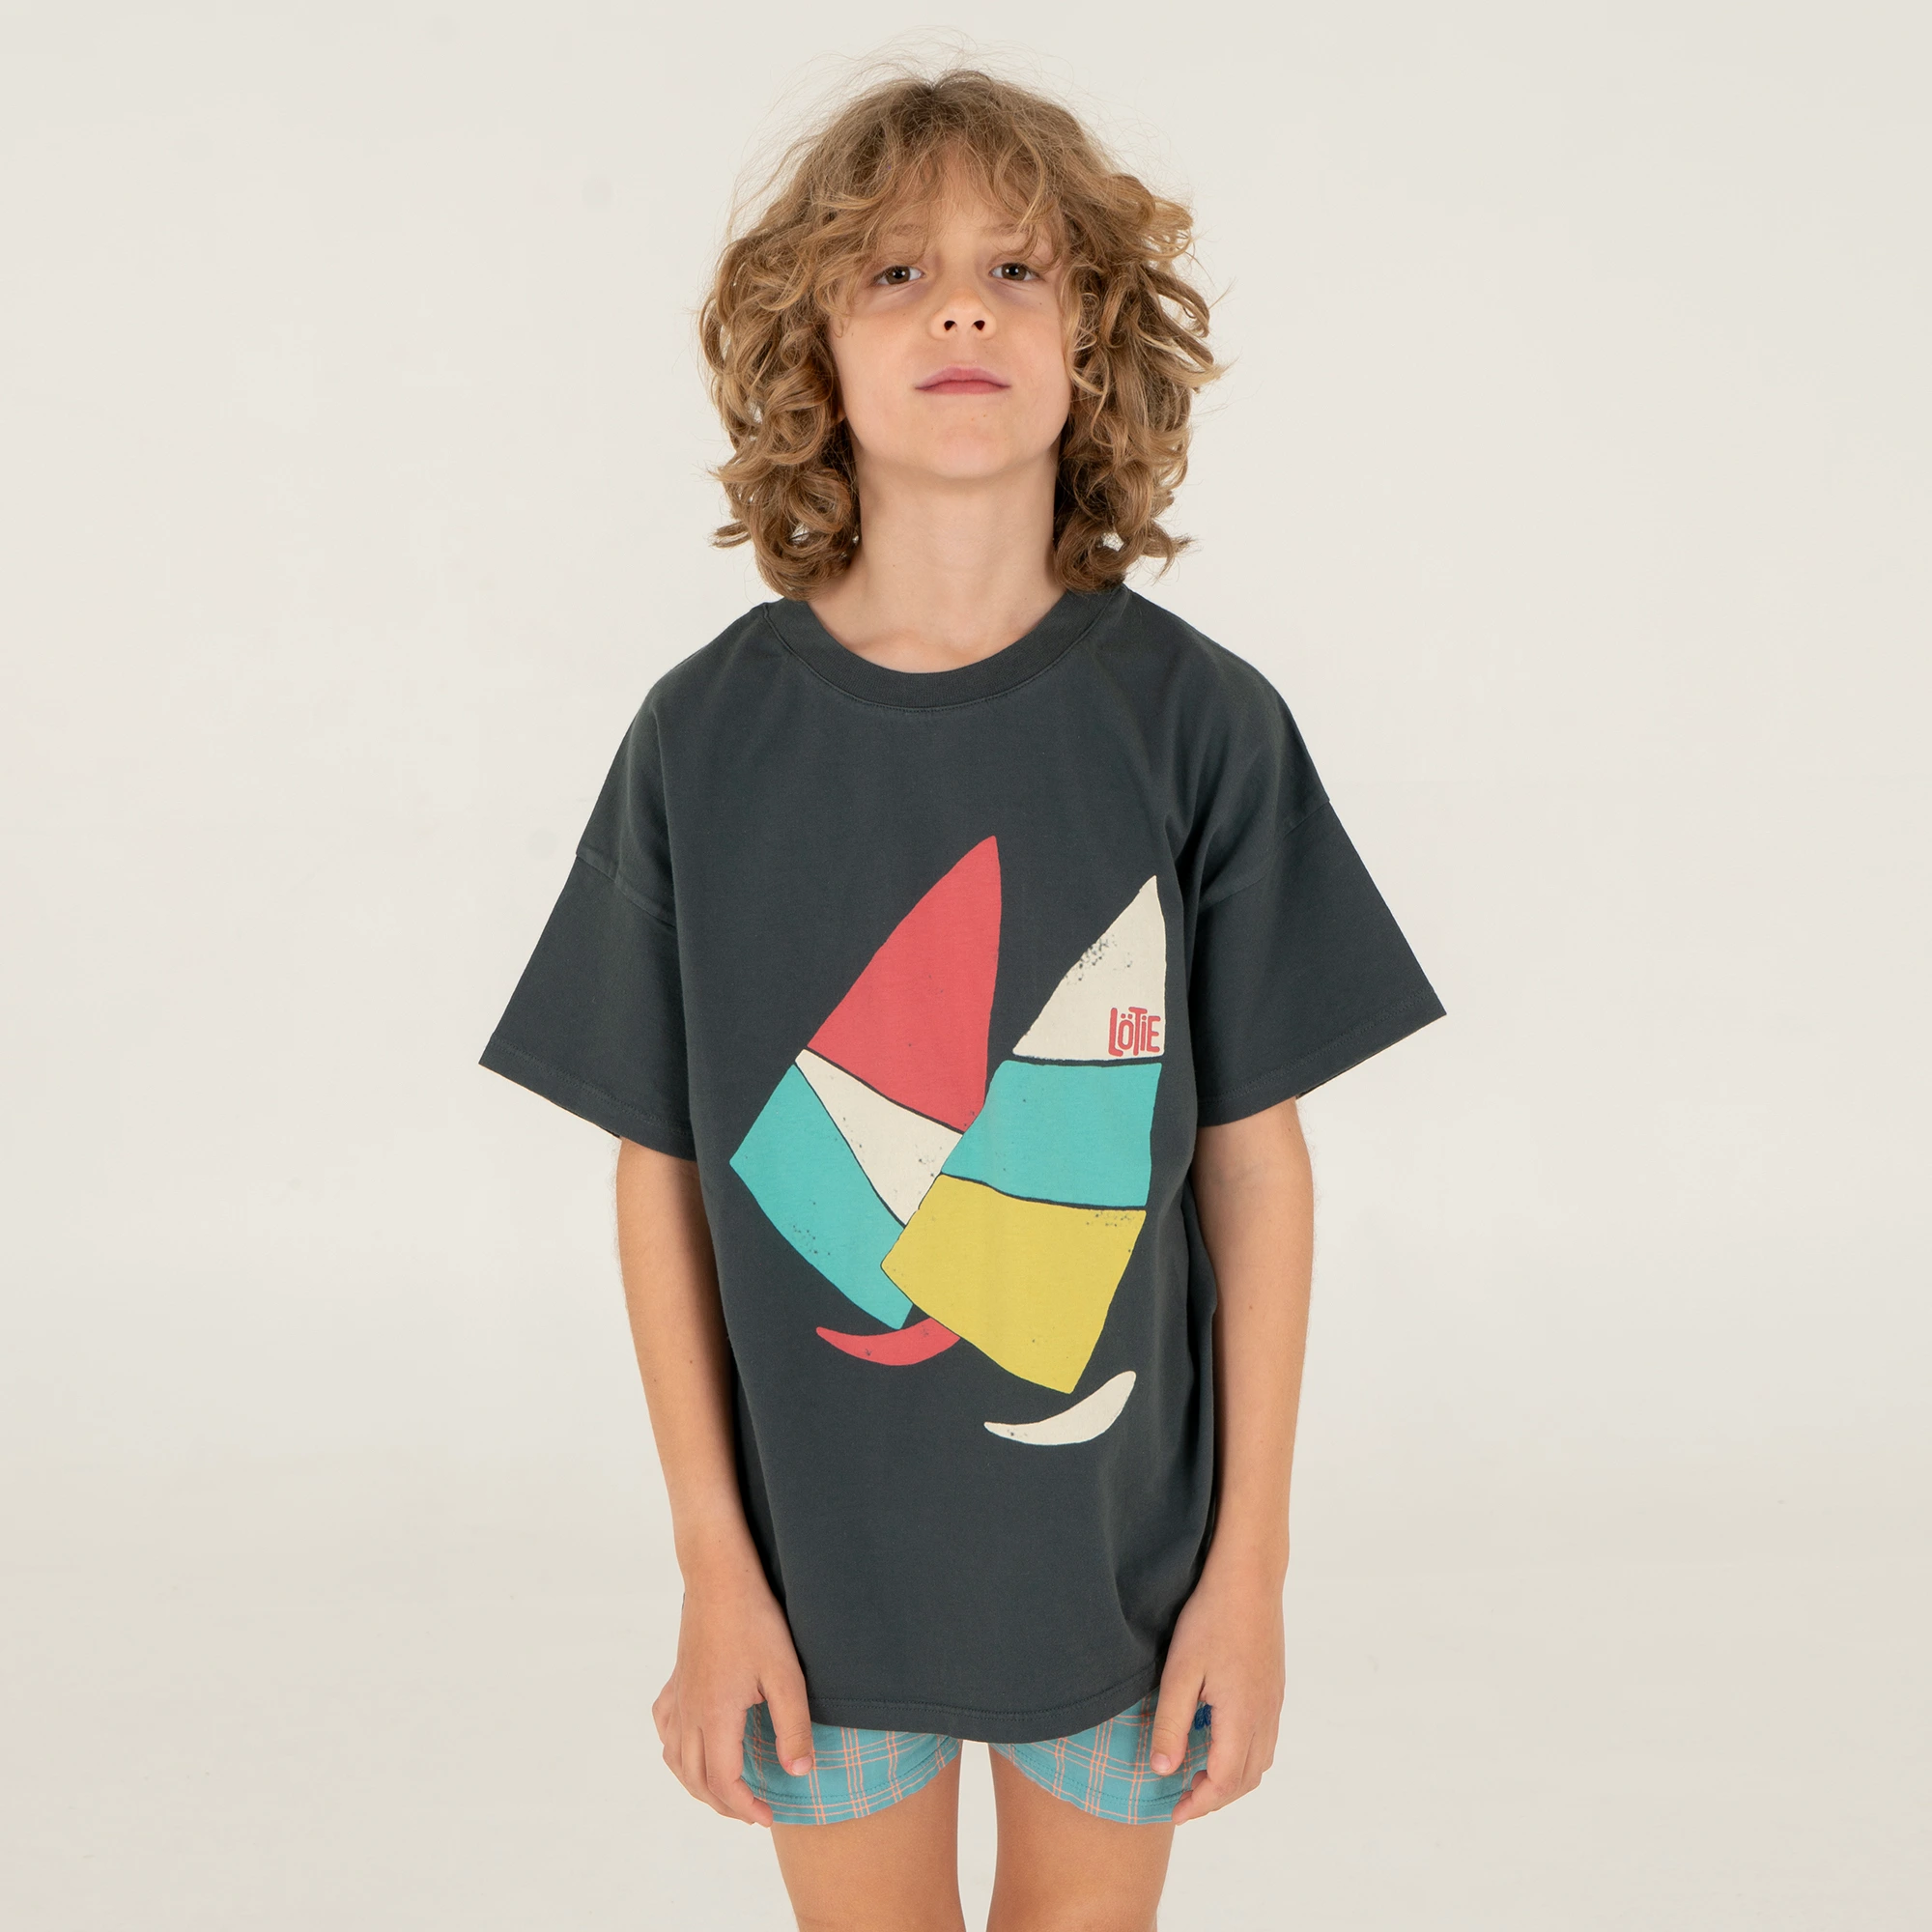 Lötie kids Wide Fit T-shirt Windsurf | Anthracita